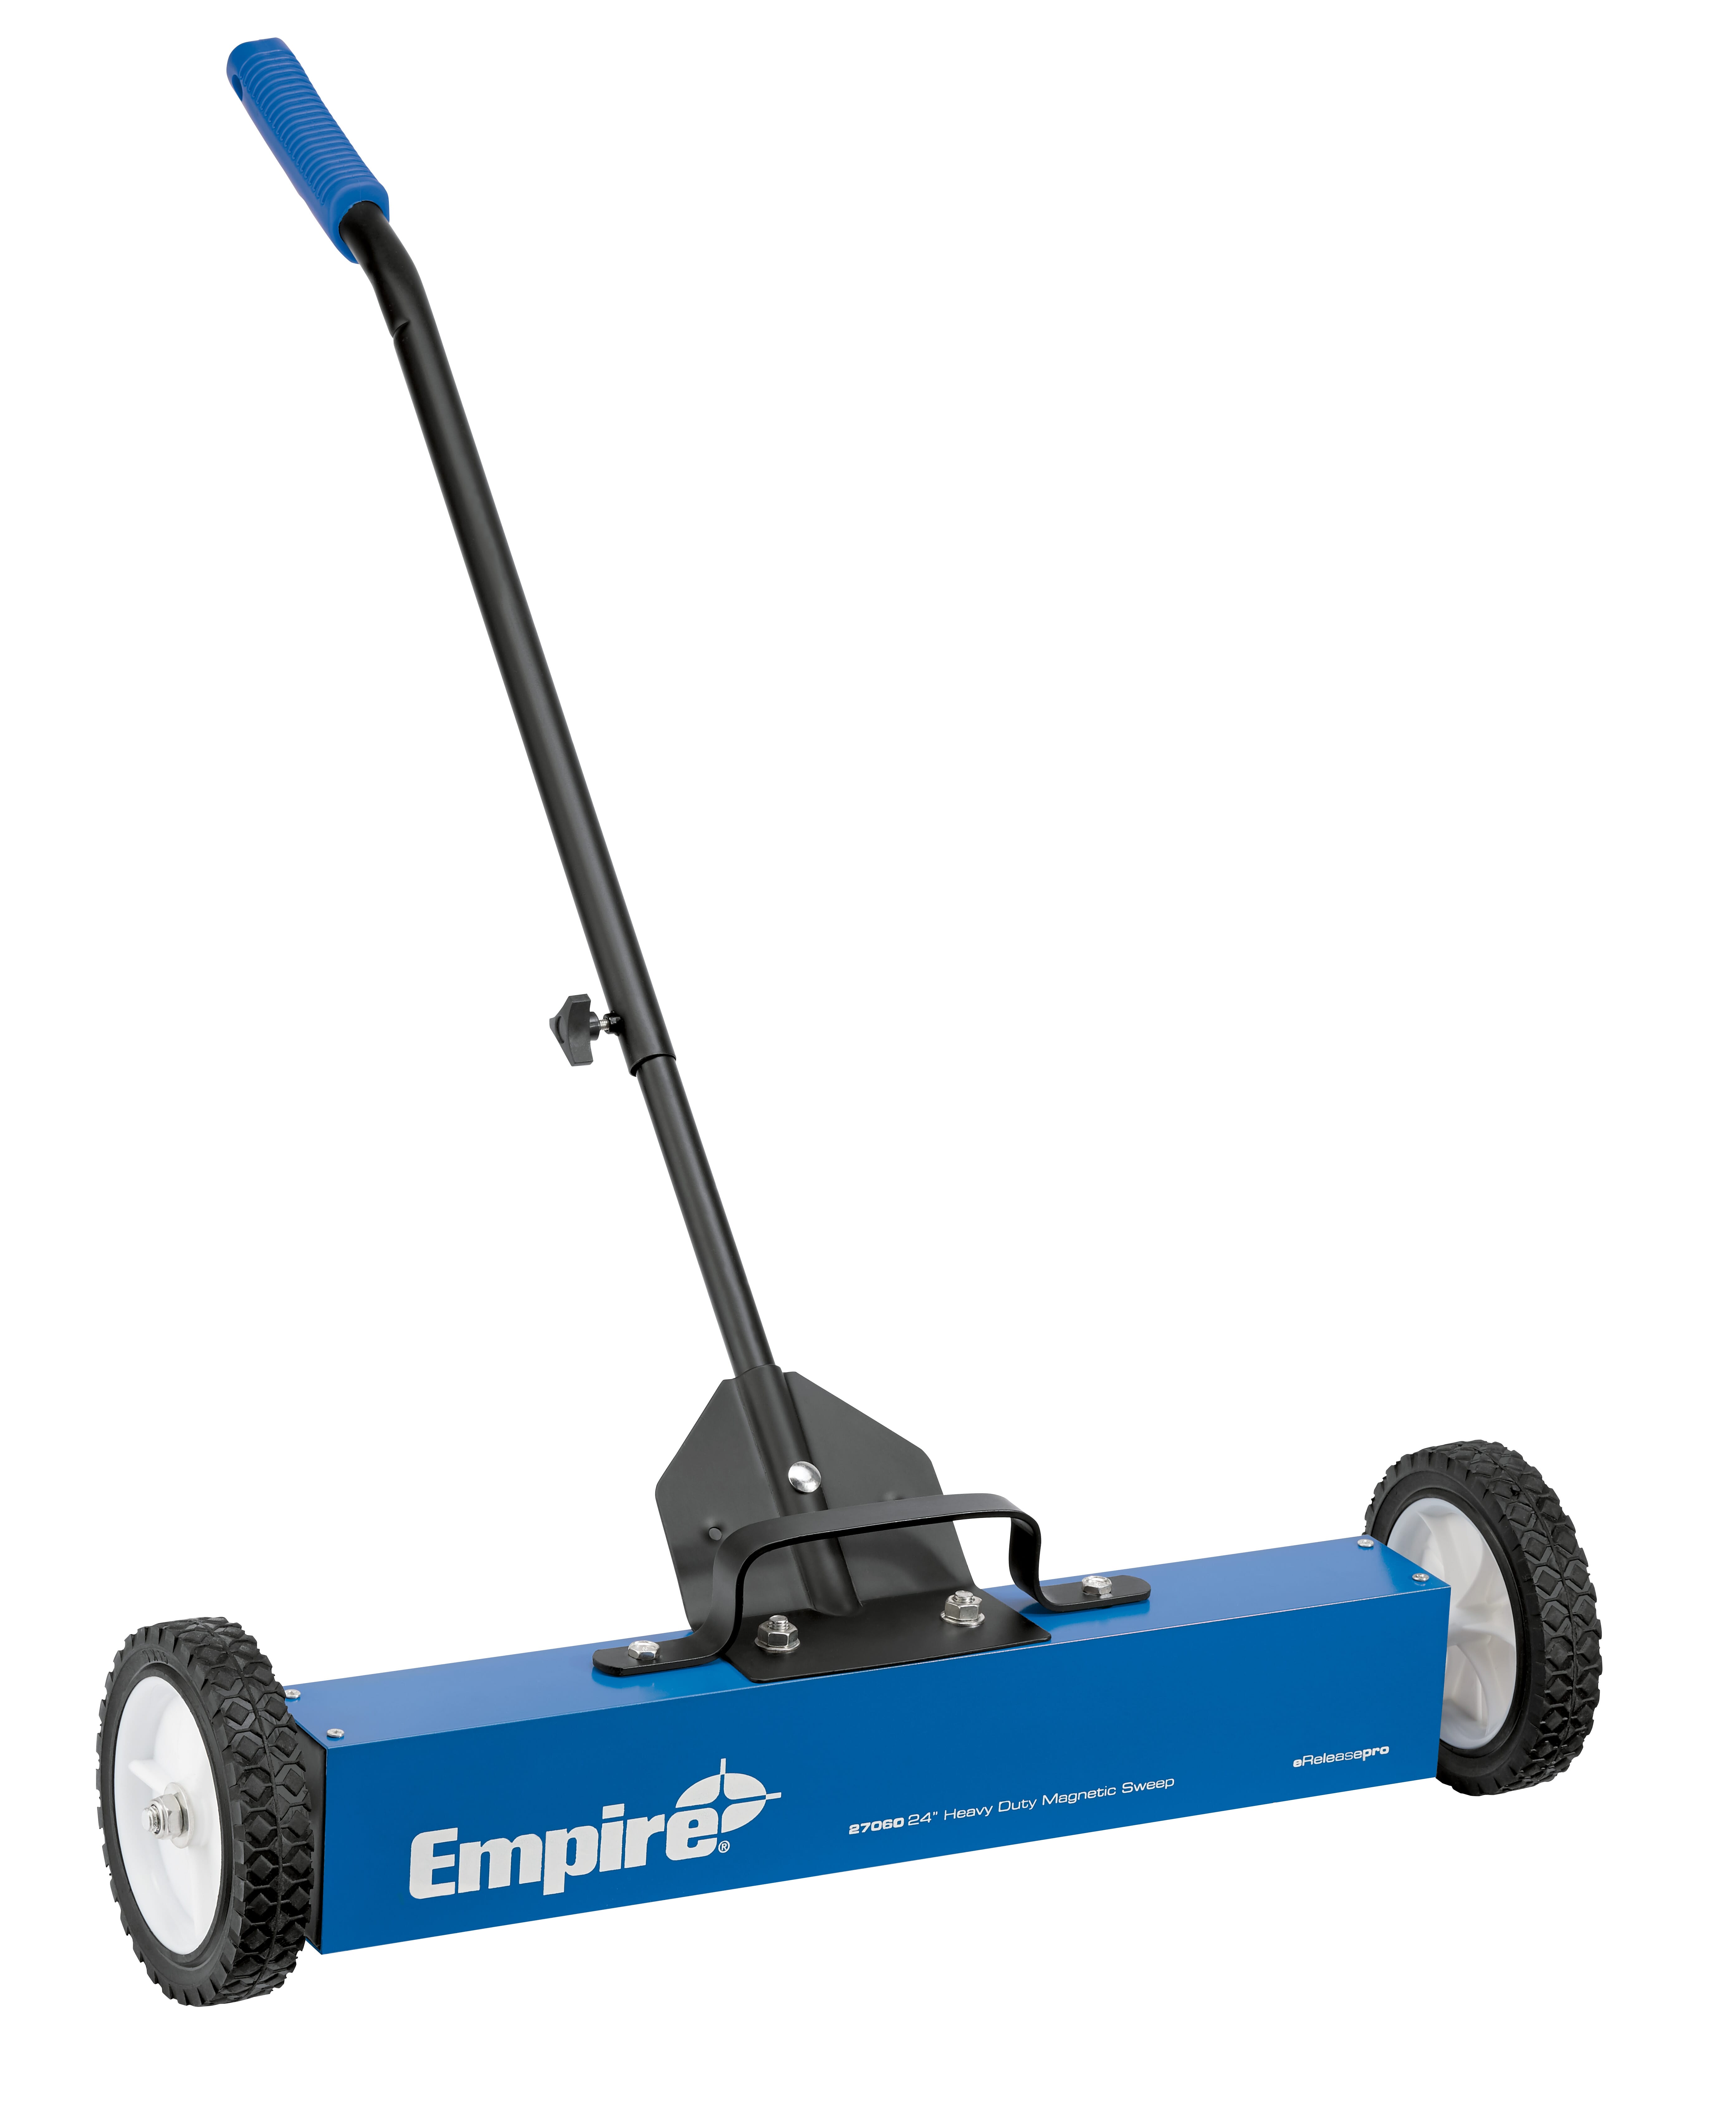 Milwaukee® Empire® 27060 Heavy Duty Magnetic Sweeper, 30 lb Capacity, Aluminum Housing